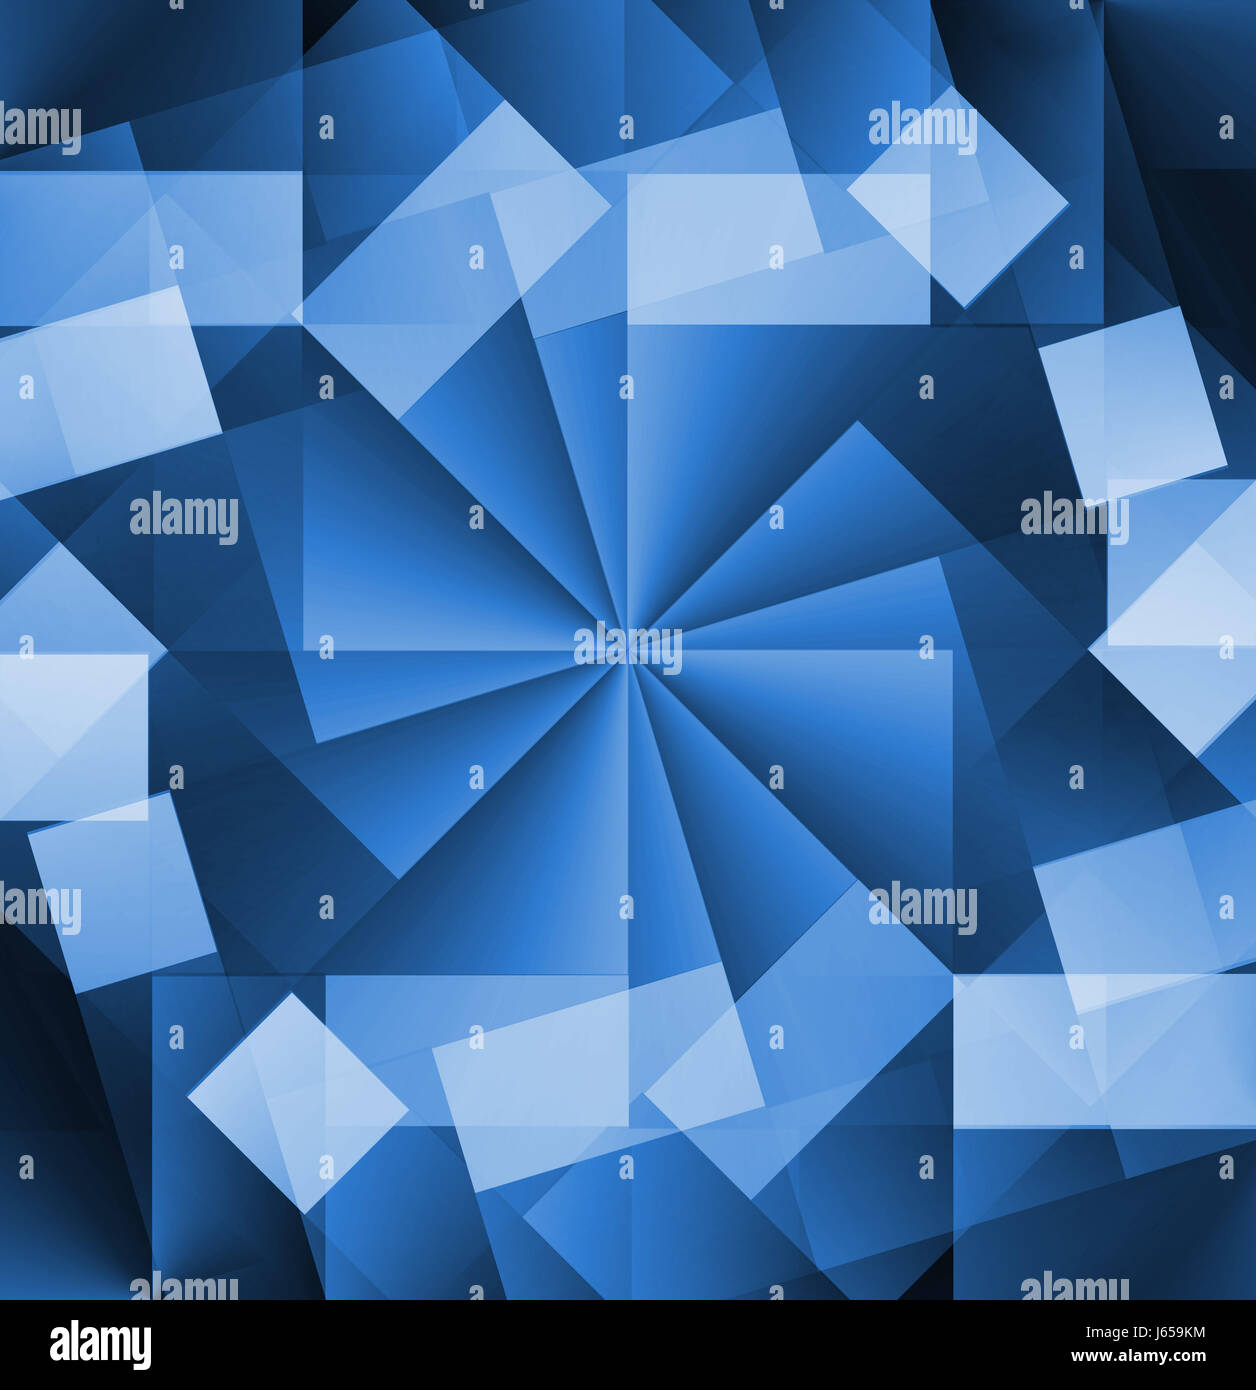 blue symmetry illustration quadrangular shape abstract squares blue graphic Stock Photo